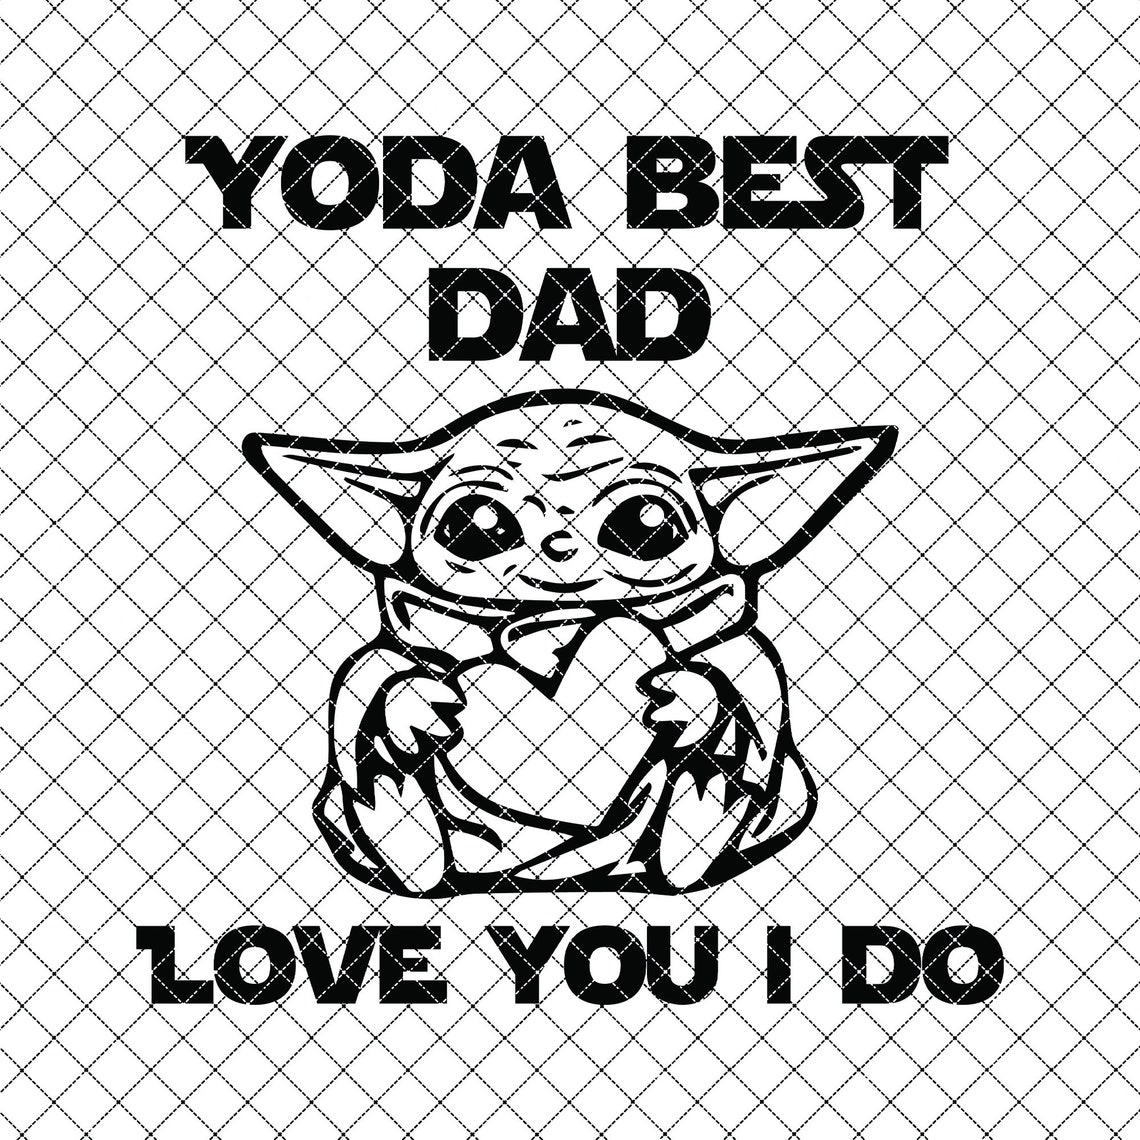 Yoda best Dad Love you i do SVG Yoda best dad SVG Baby Yoda | Etsy